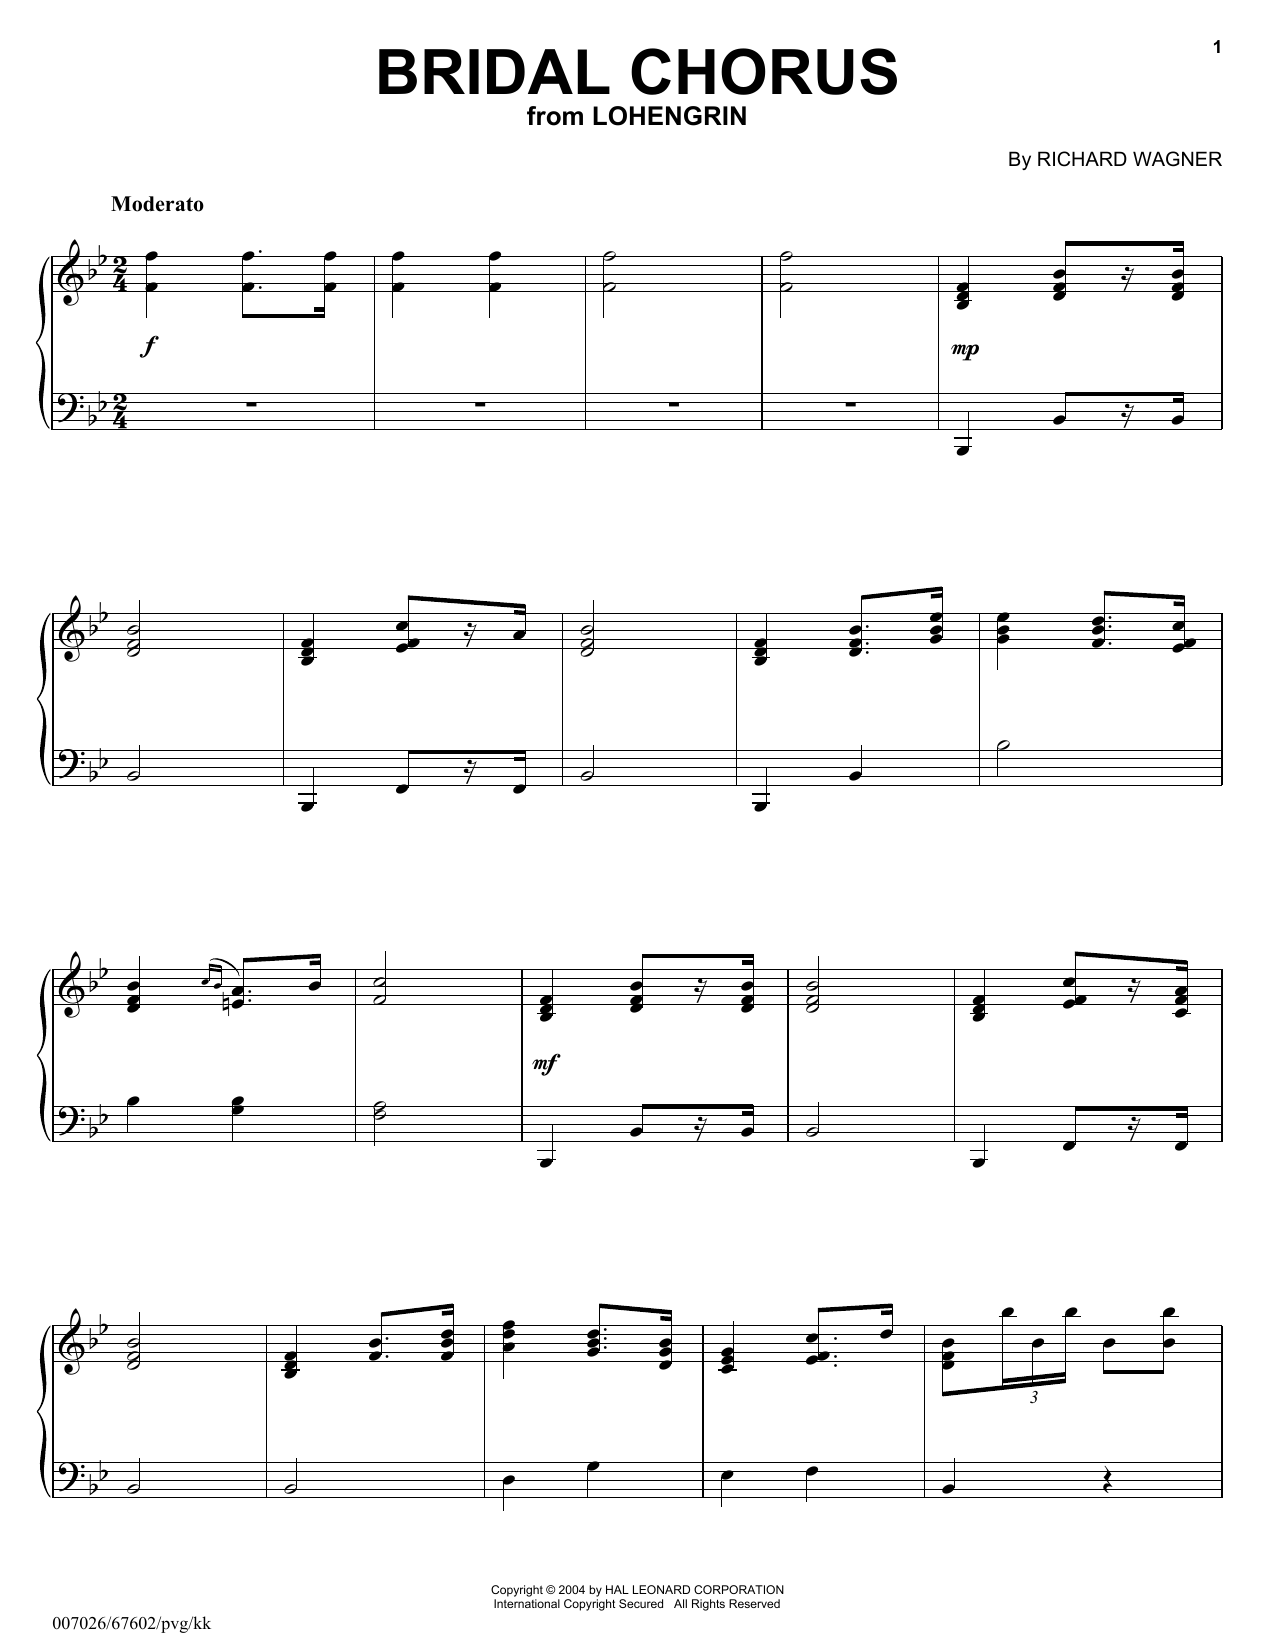 Richard Wagner Bridal Chorus Sheet Music Notes & Chords for Tenor Saxophone - Download or Print PDF